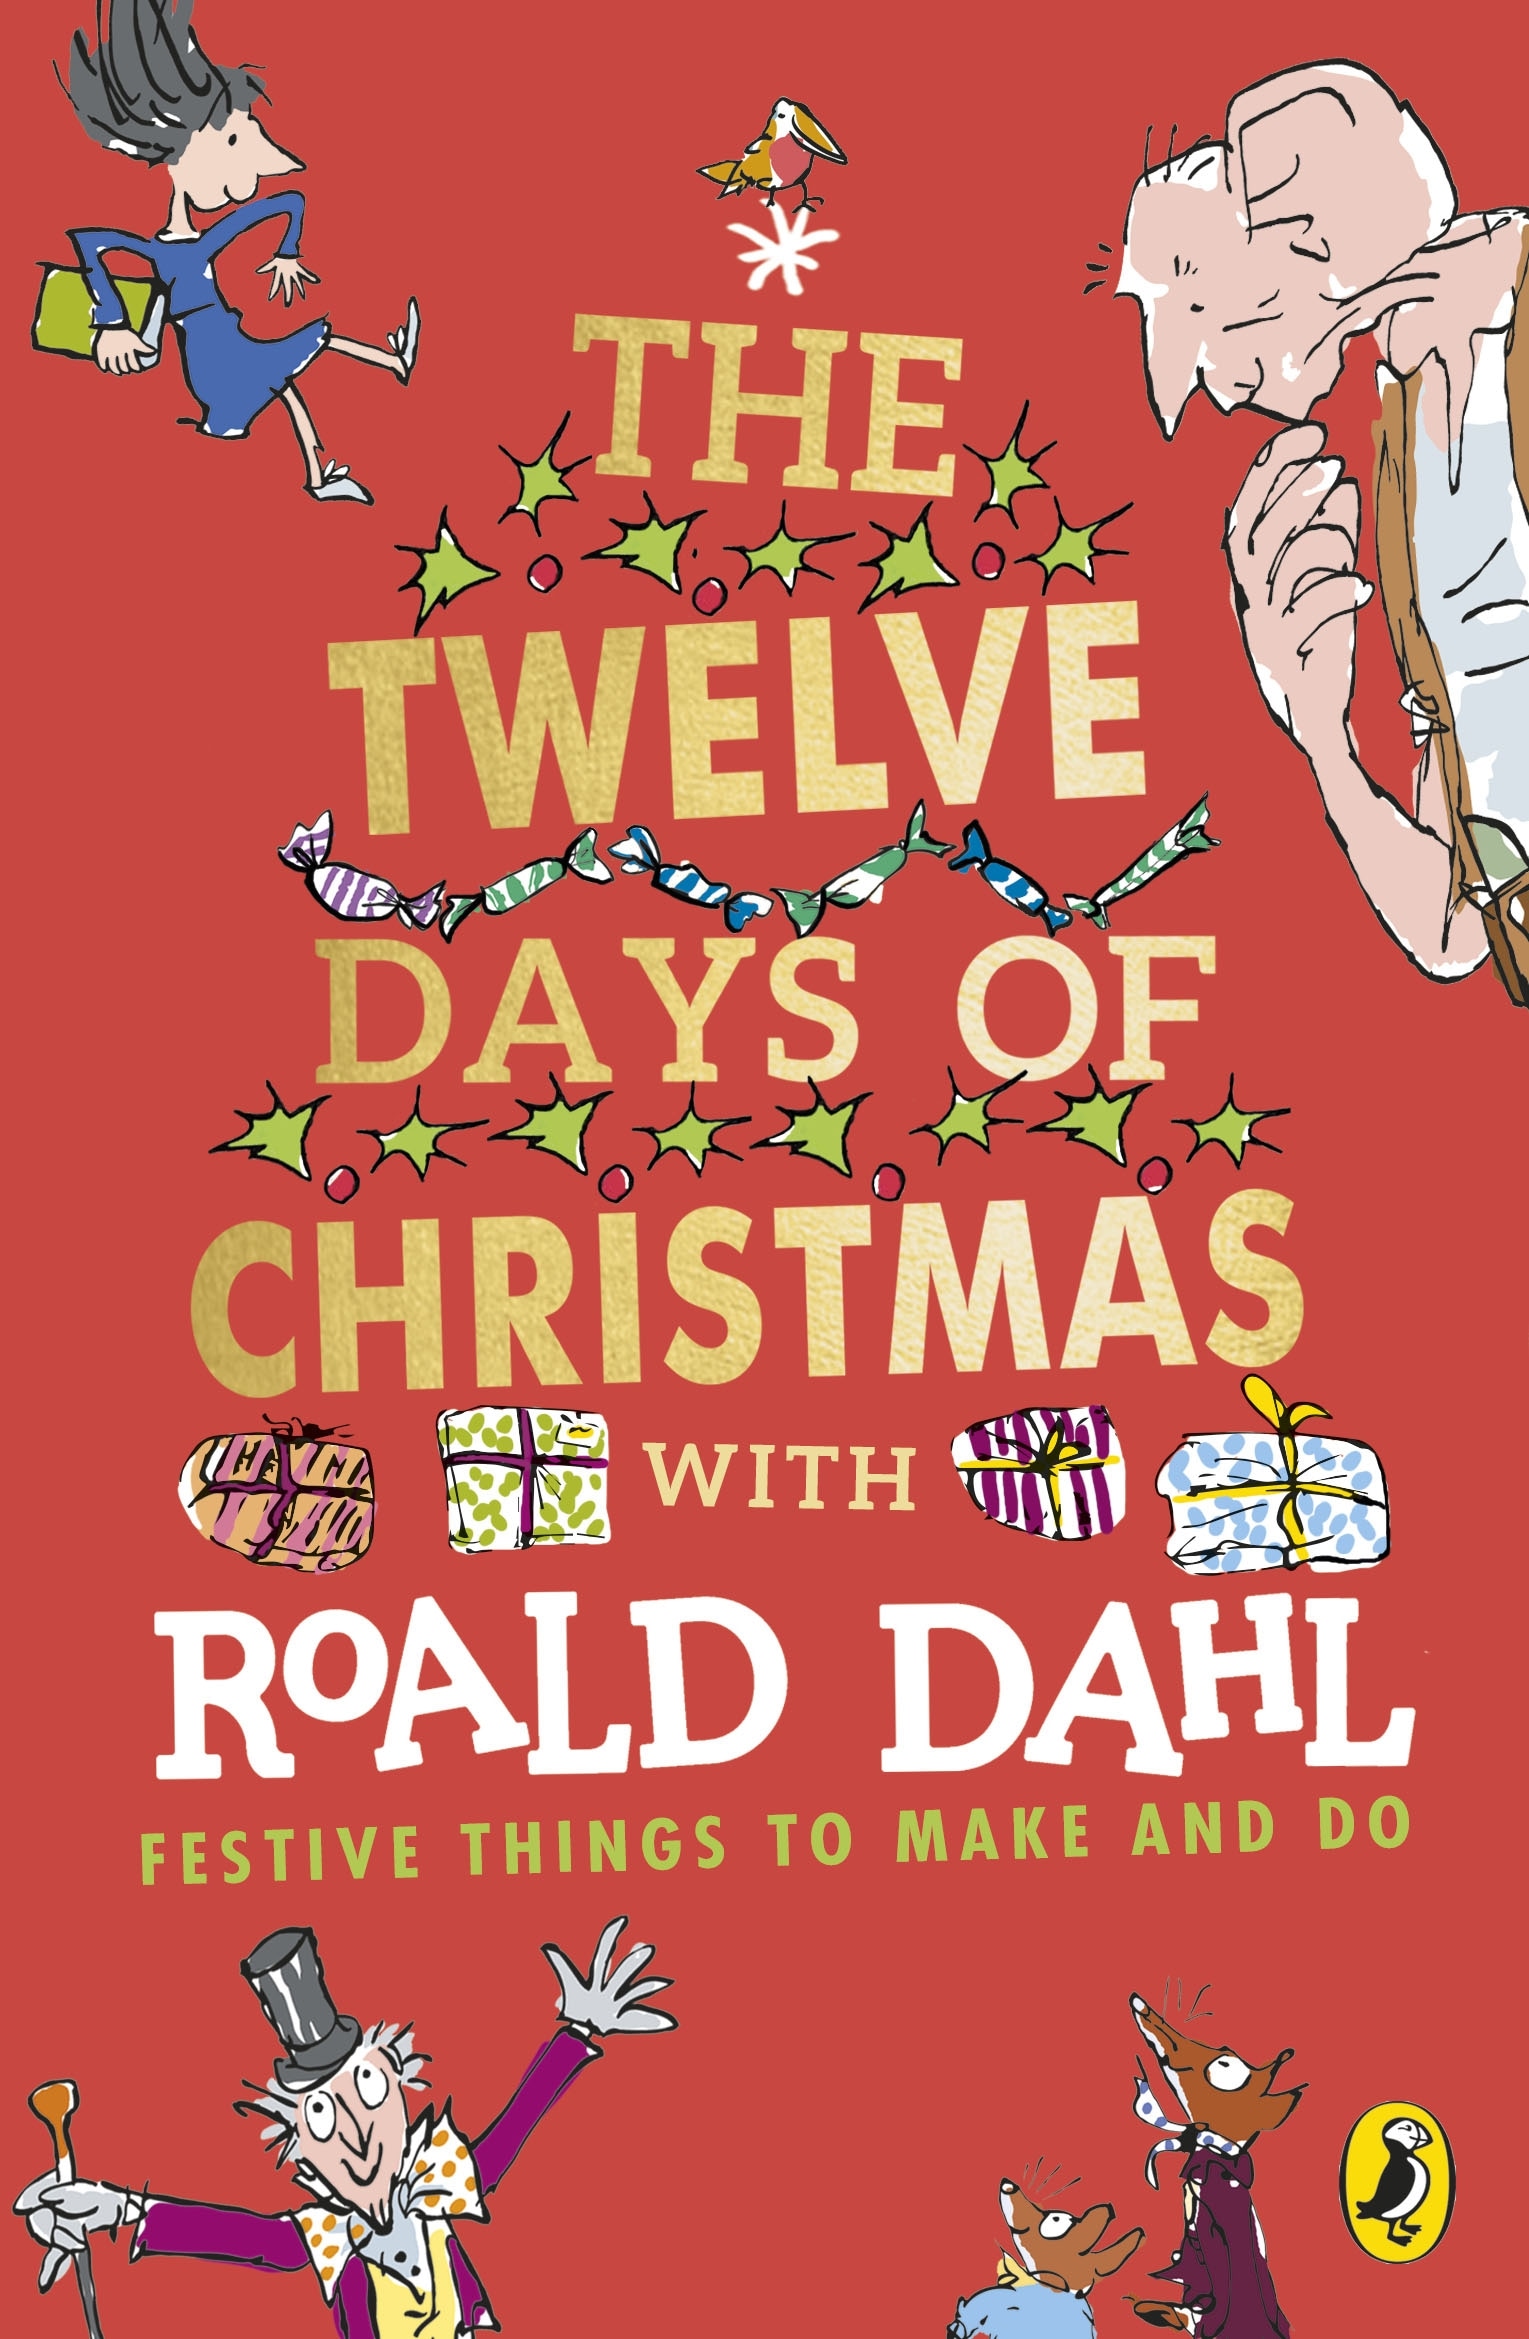 Book “Roald Dahl's The Twelve Days of Christmas” by Roald Dahl — October 17, 2019